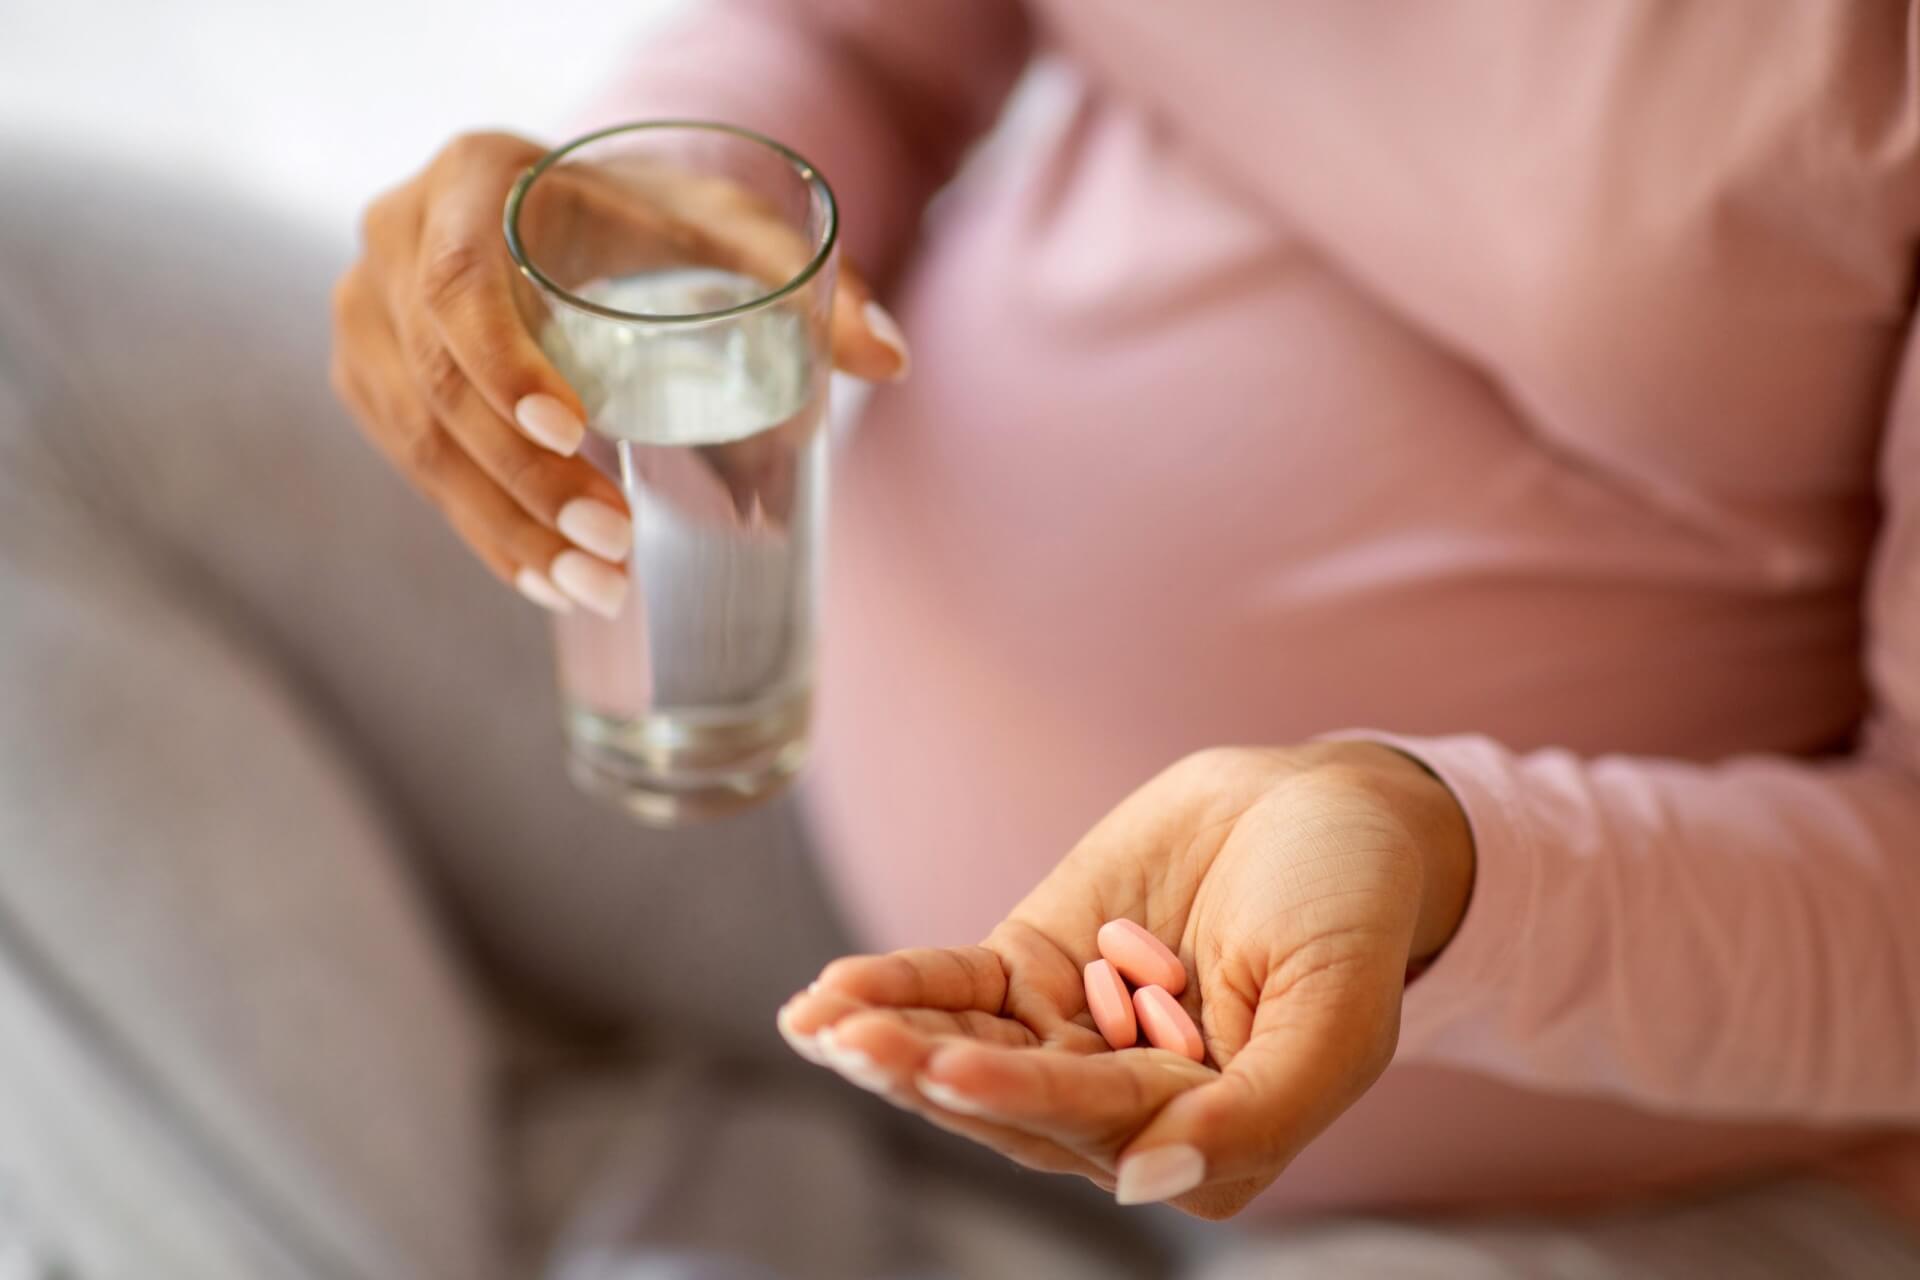 pregnant woman taking prenatal vitamins